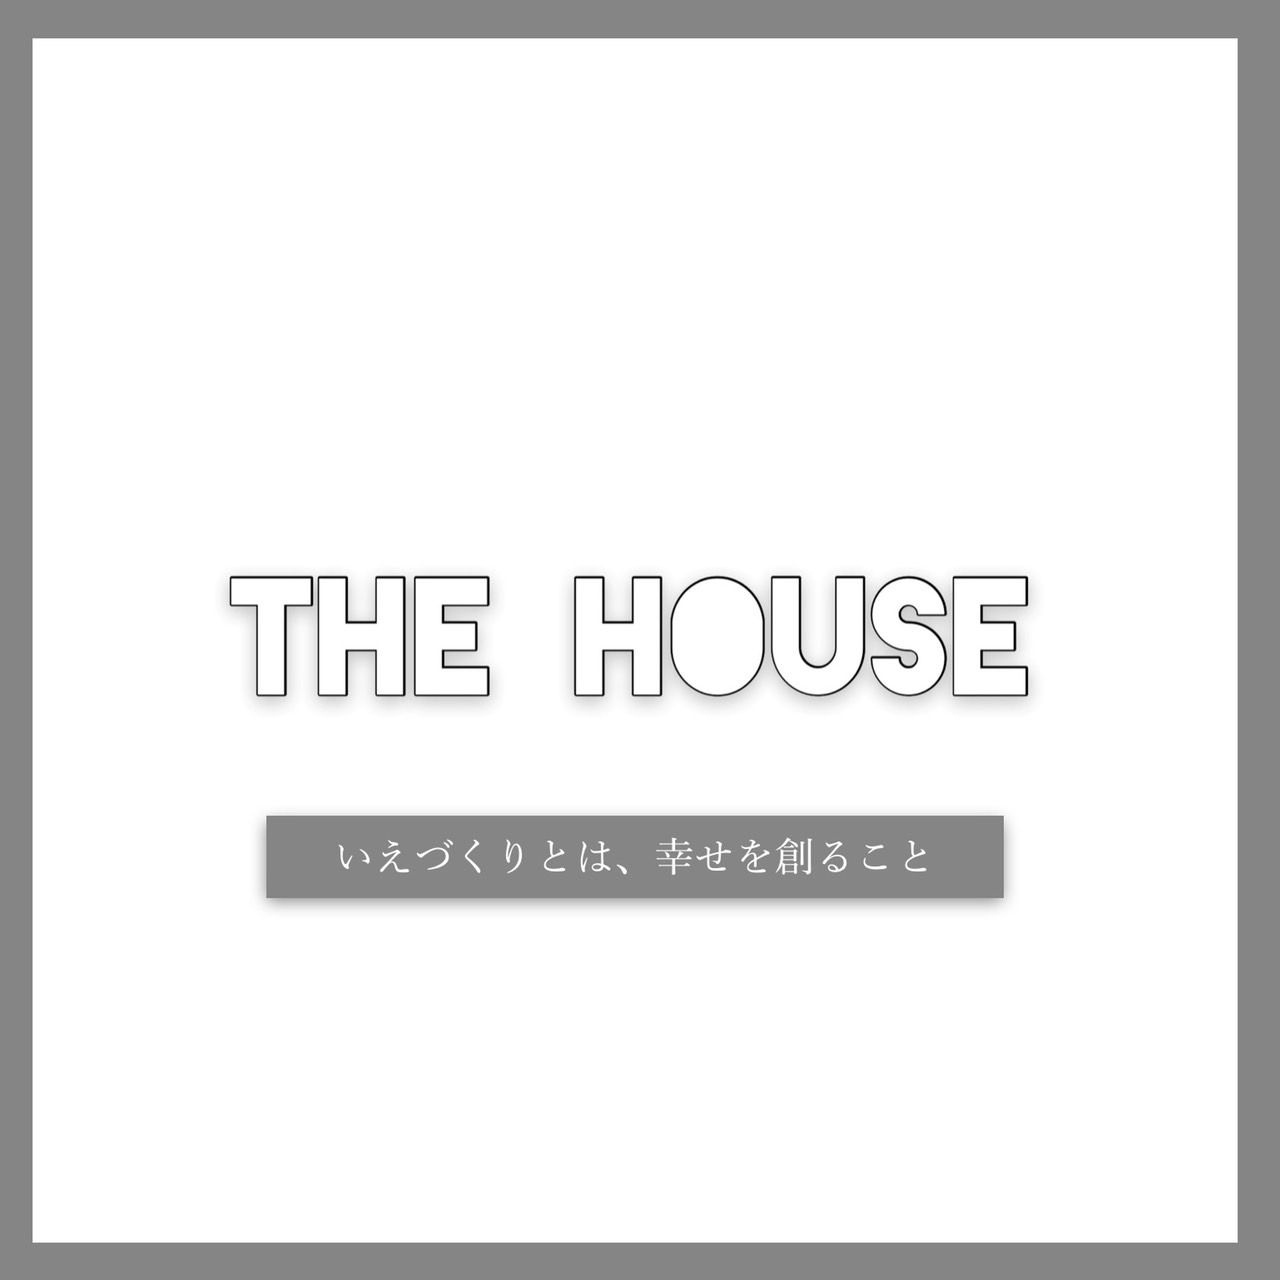 株式会社THE HOUSE